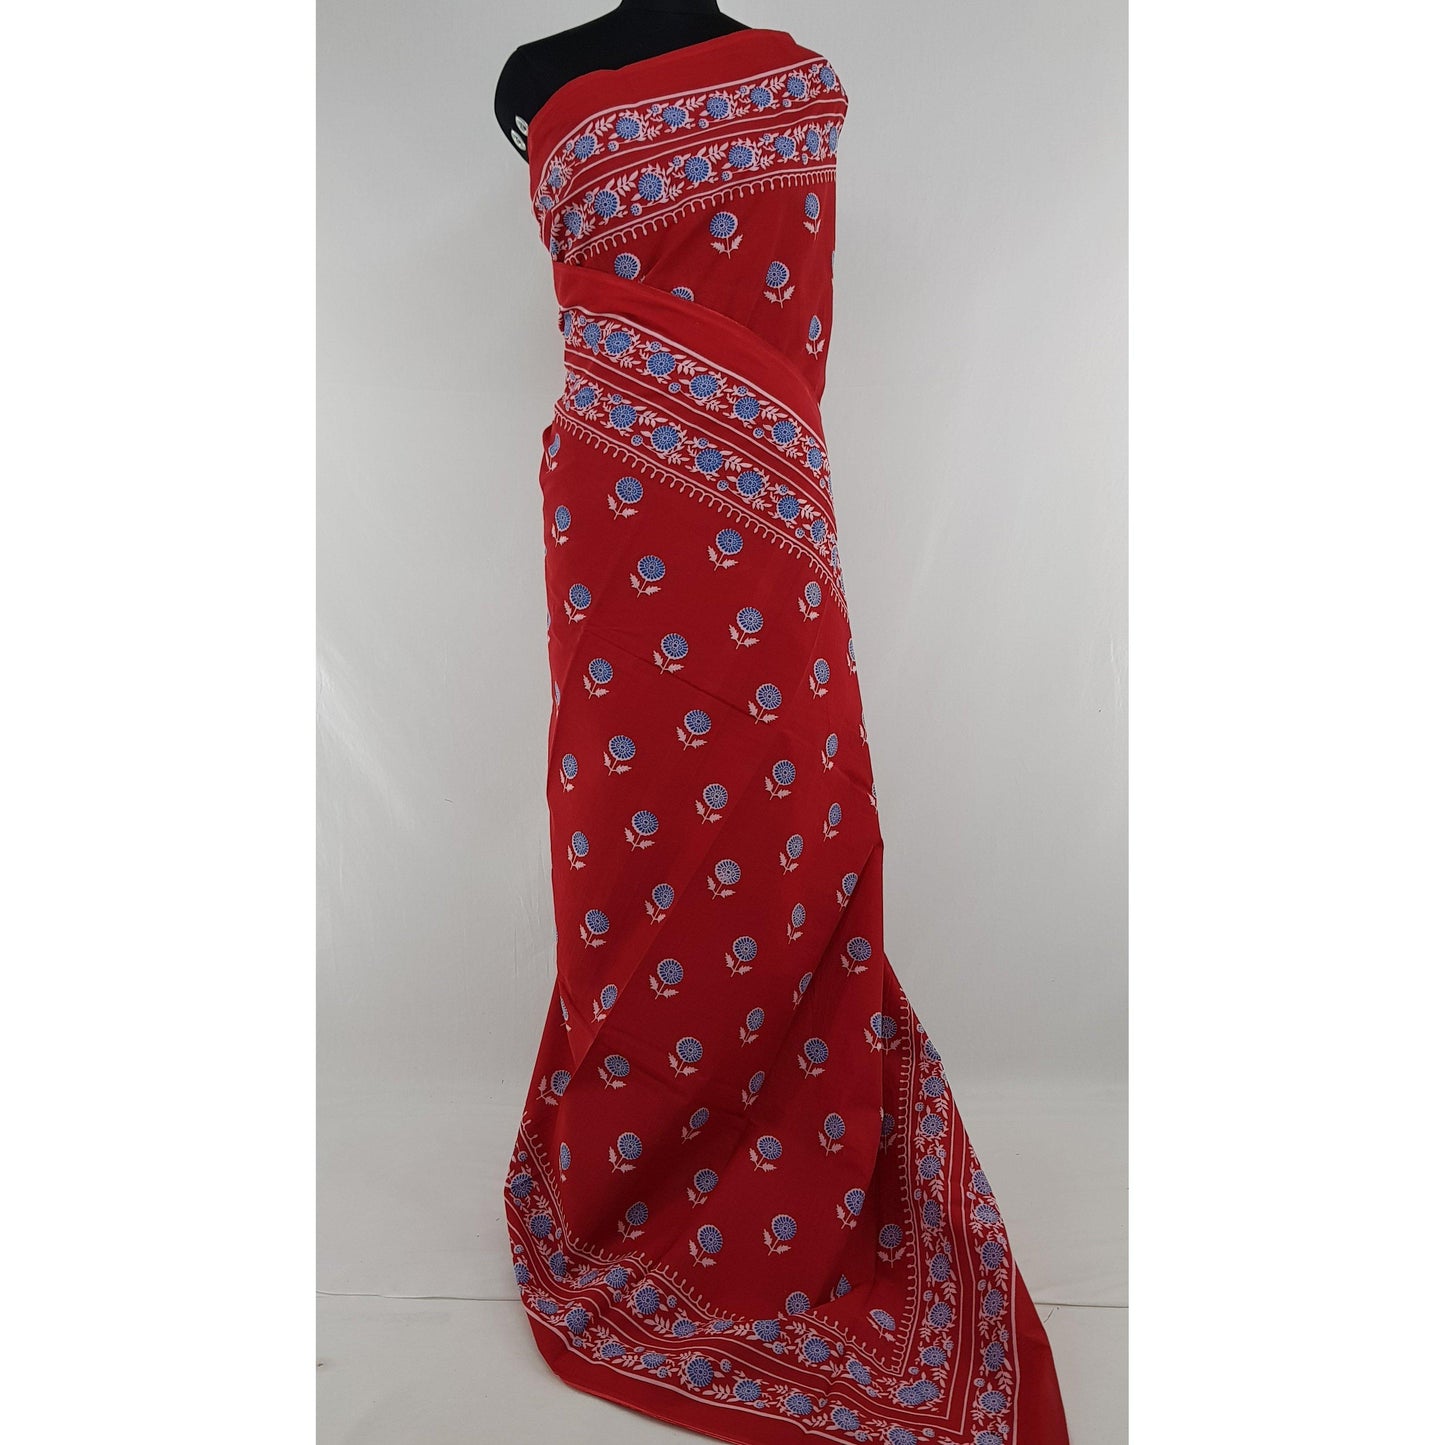 Hand Block Printed Bagru Red and Cream color mul mul cotton saree with plain blouse - Vinshika